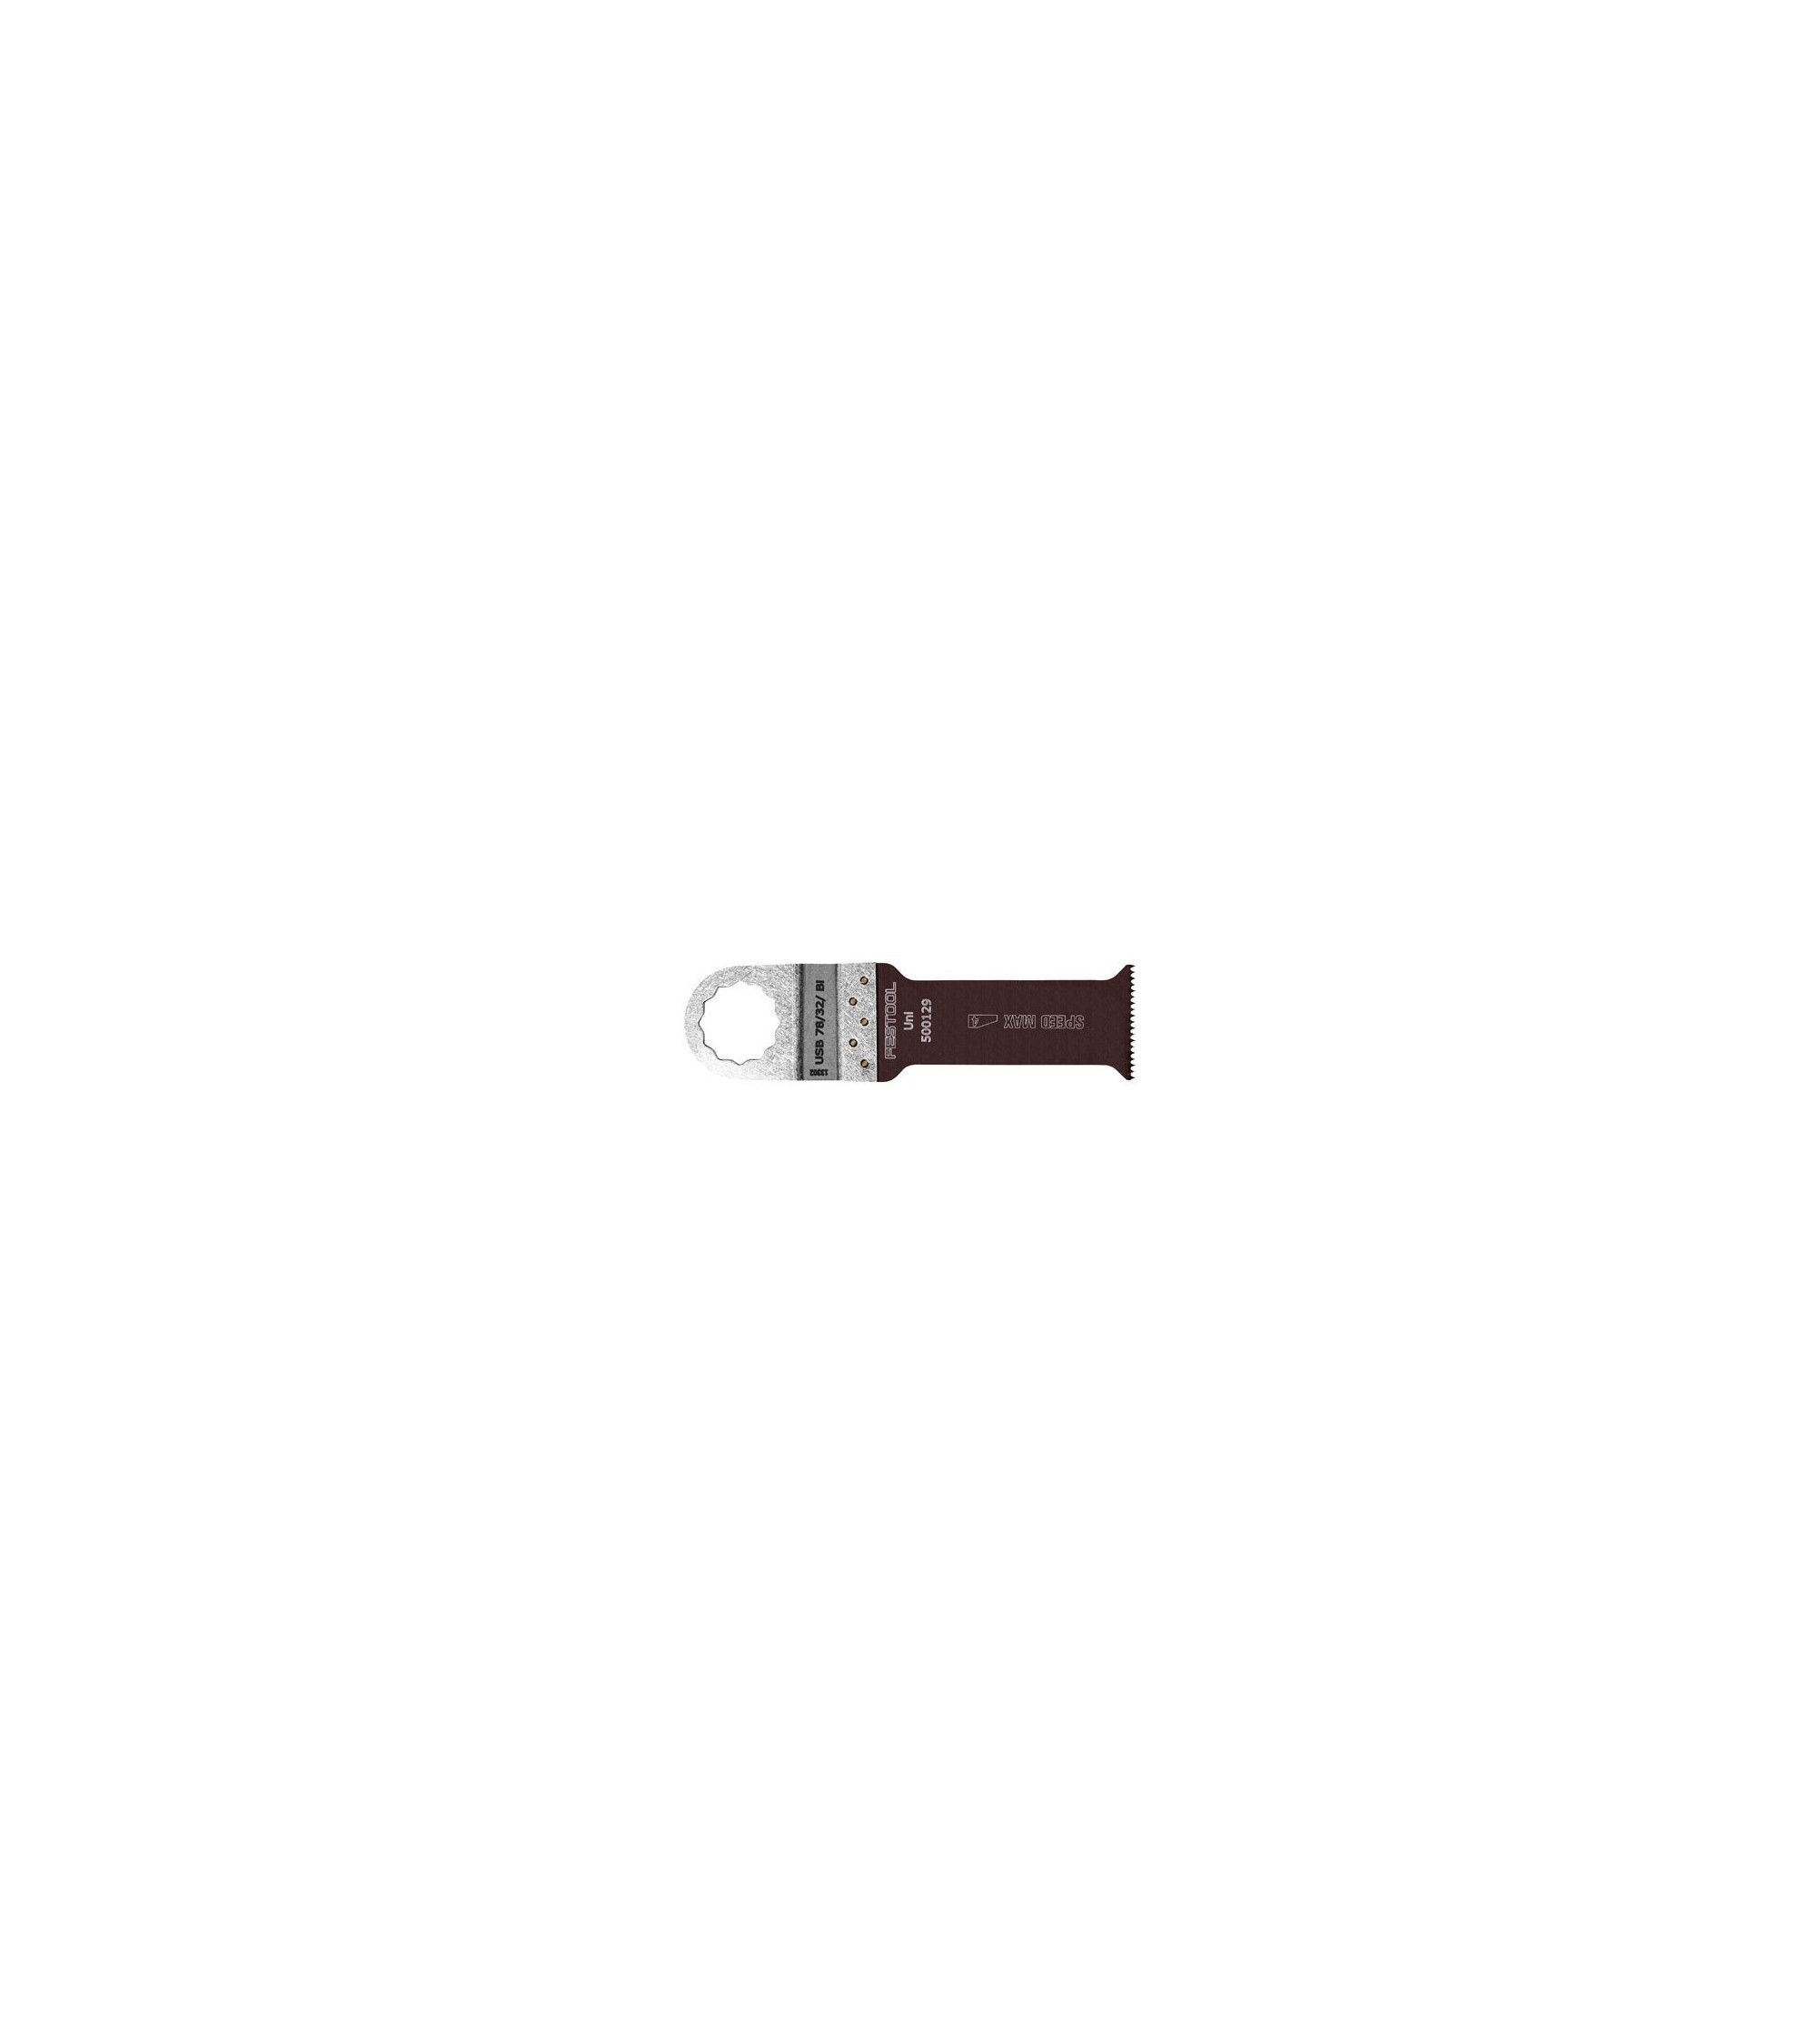 Festool Universal saw blade USB 78/32/Bi 5x, KAINA BE PVM: 66.519, KODAS: 500143 | 001